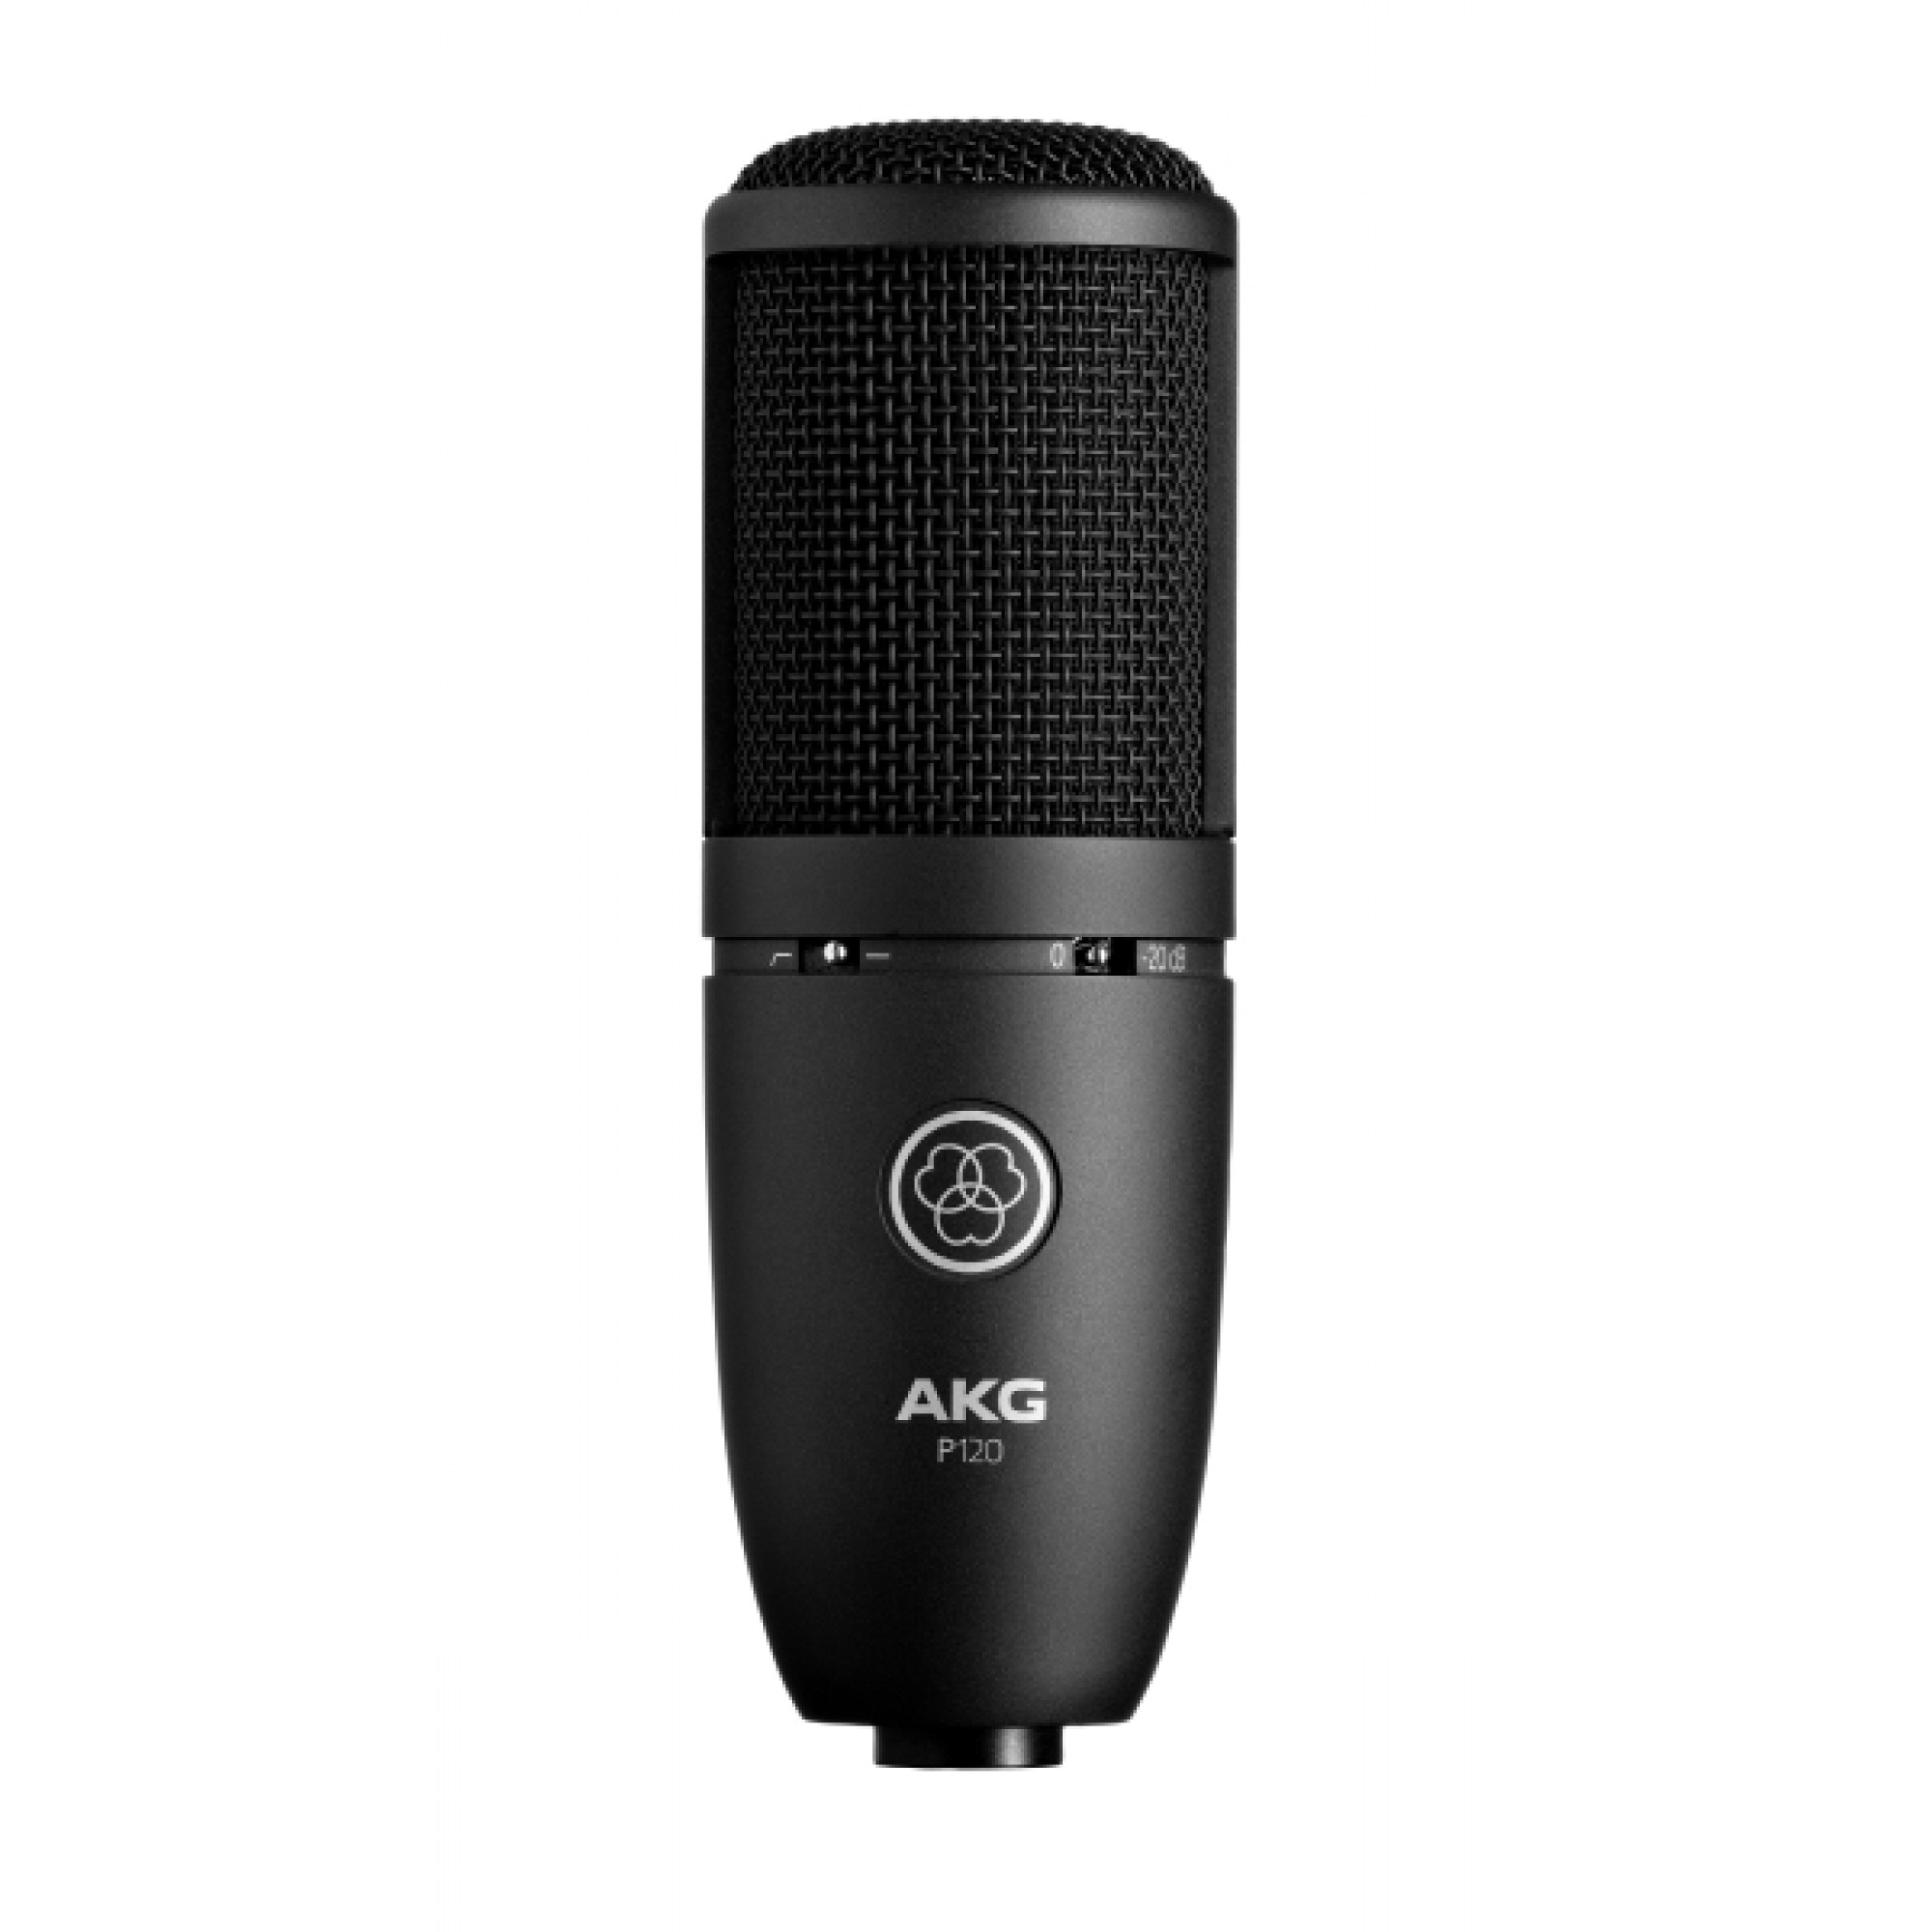 AKG AKG P120 Project Studio Large Diaphragm Condenser Microphone